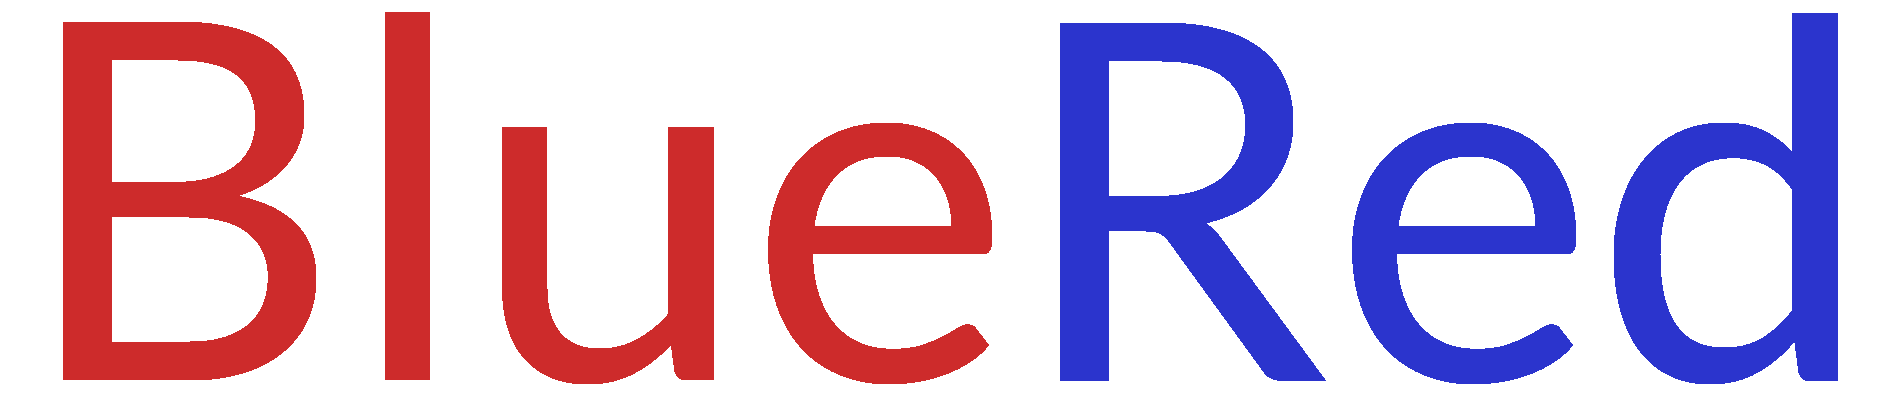 BlueRed logo